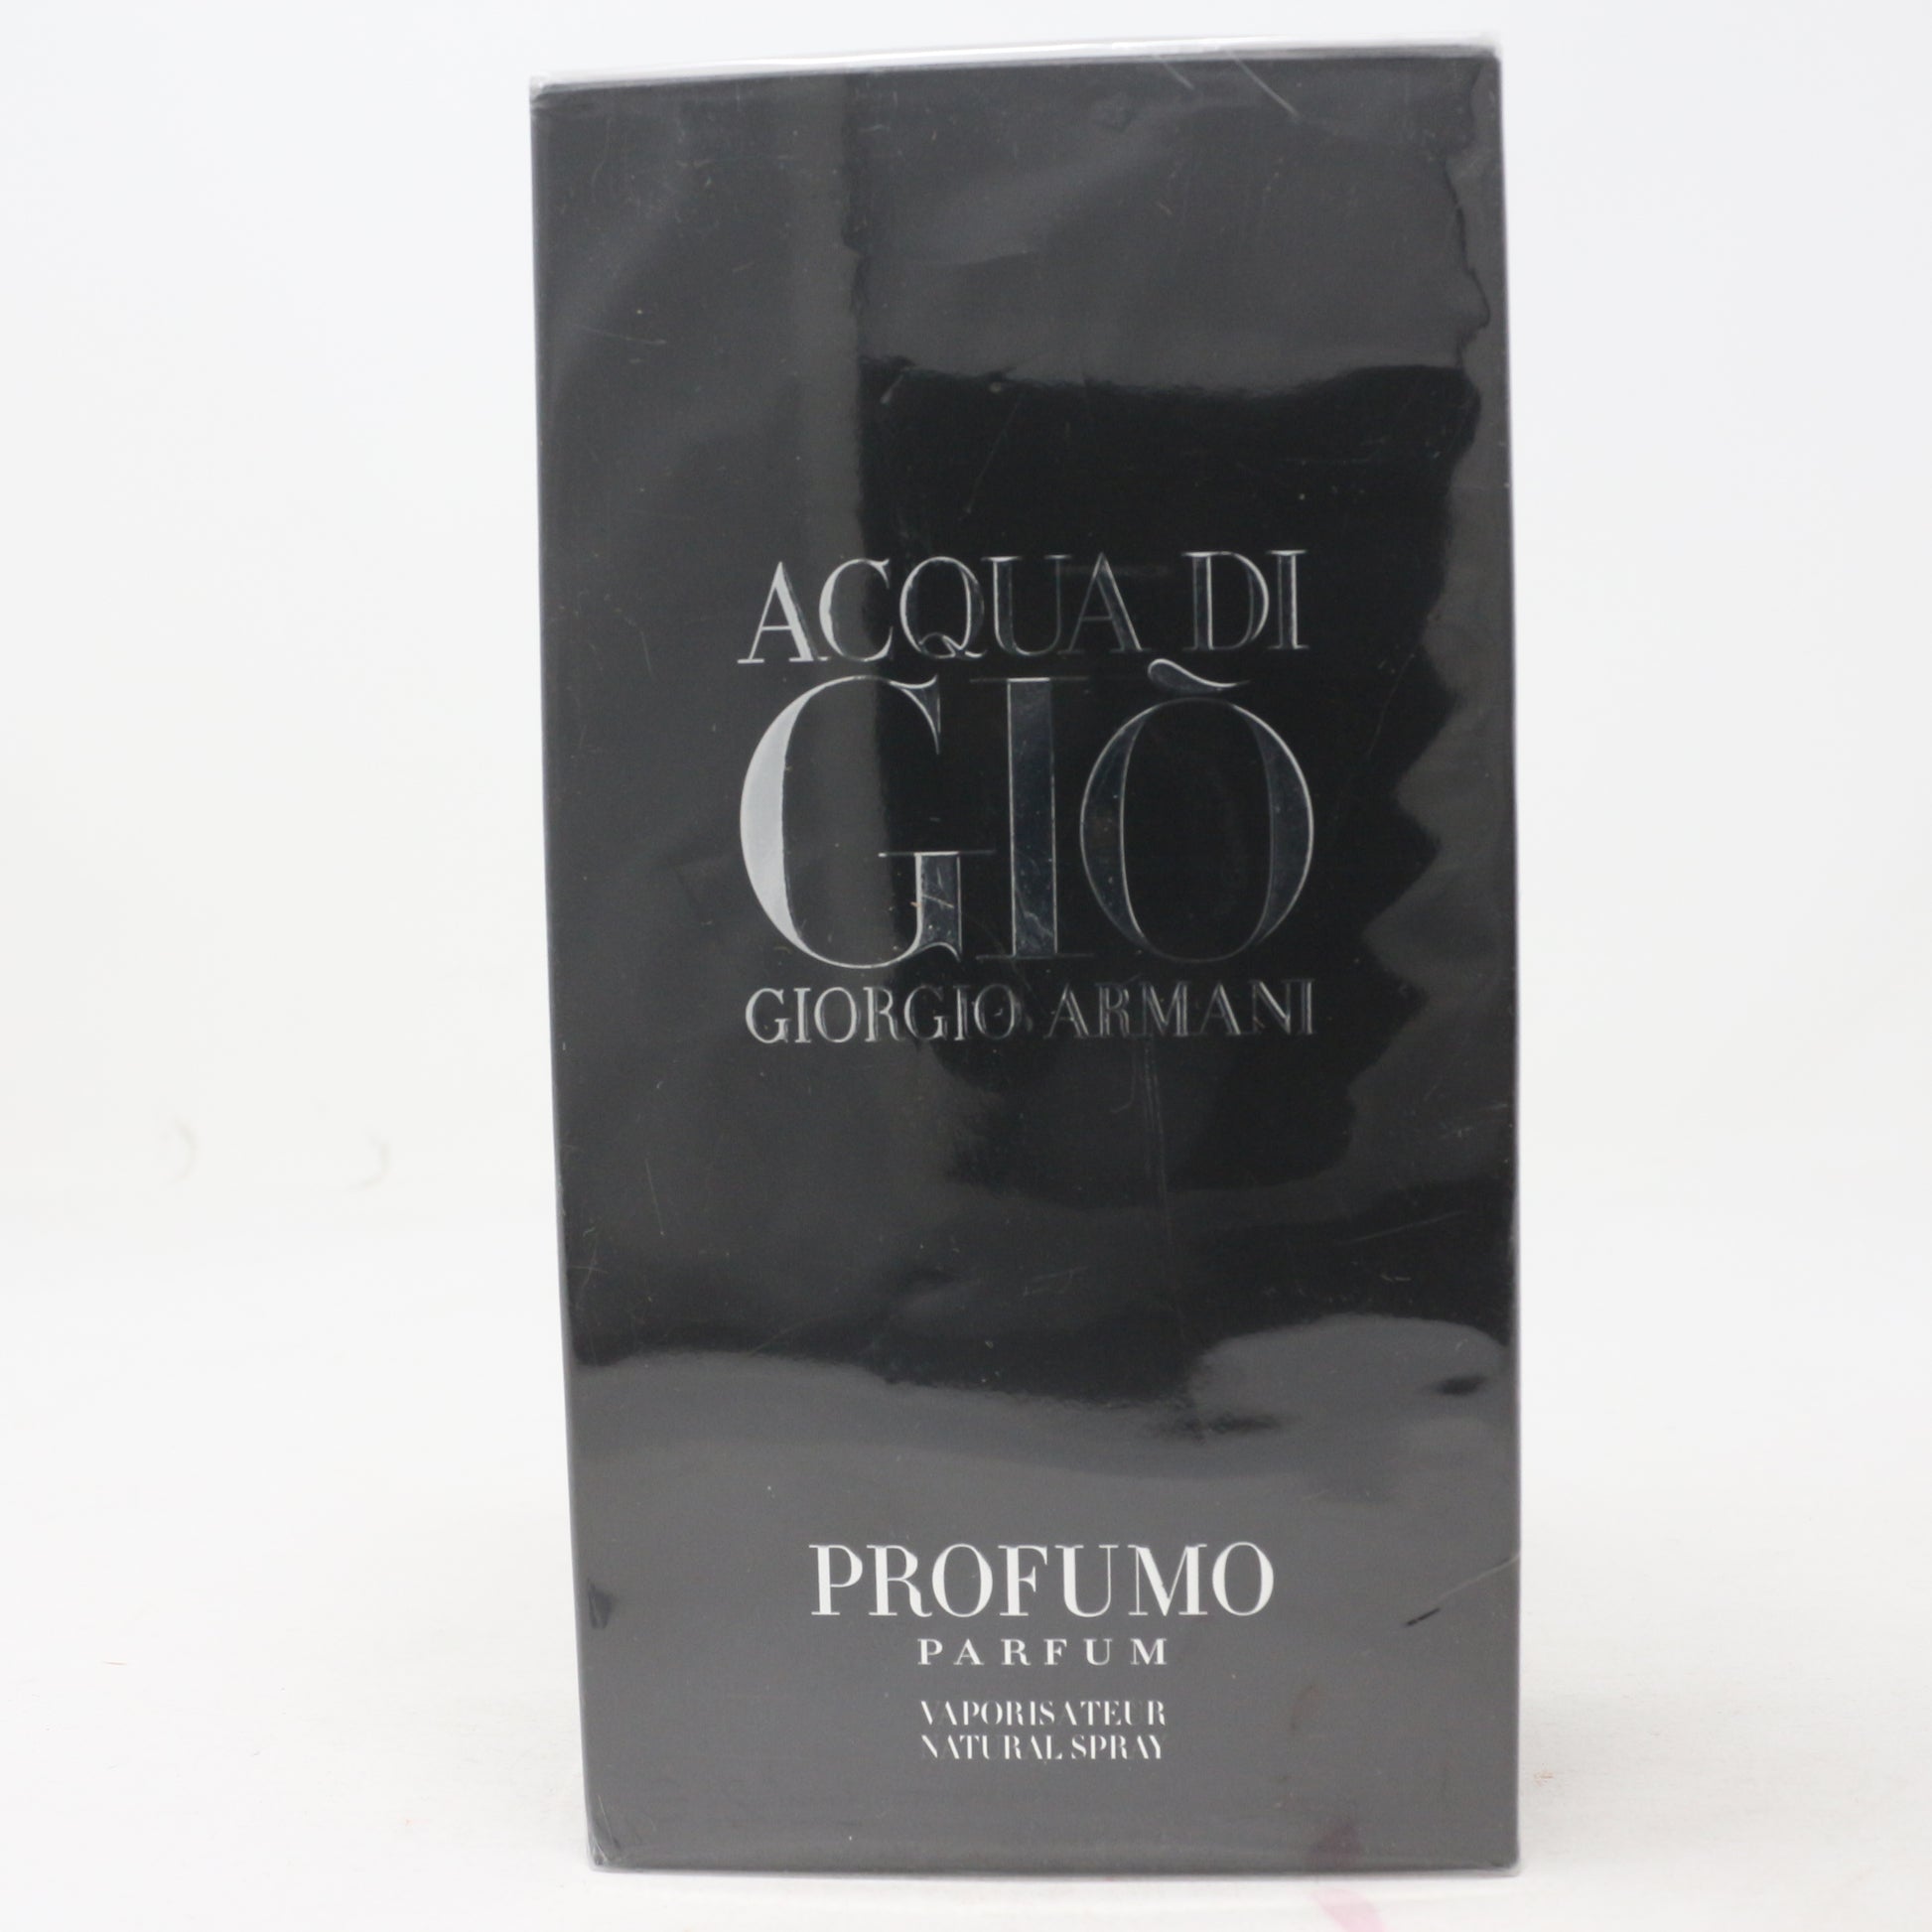 Acqua Di Gio Profumo Parfum 180 ml